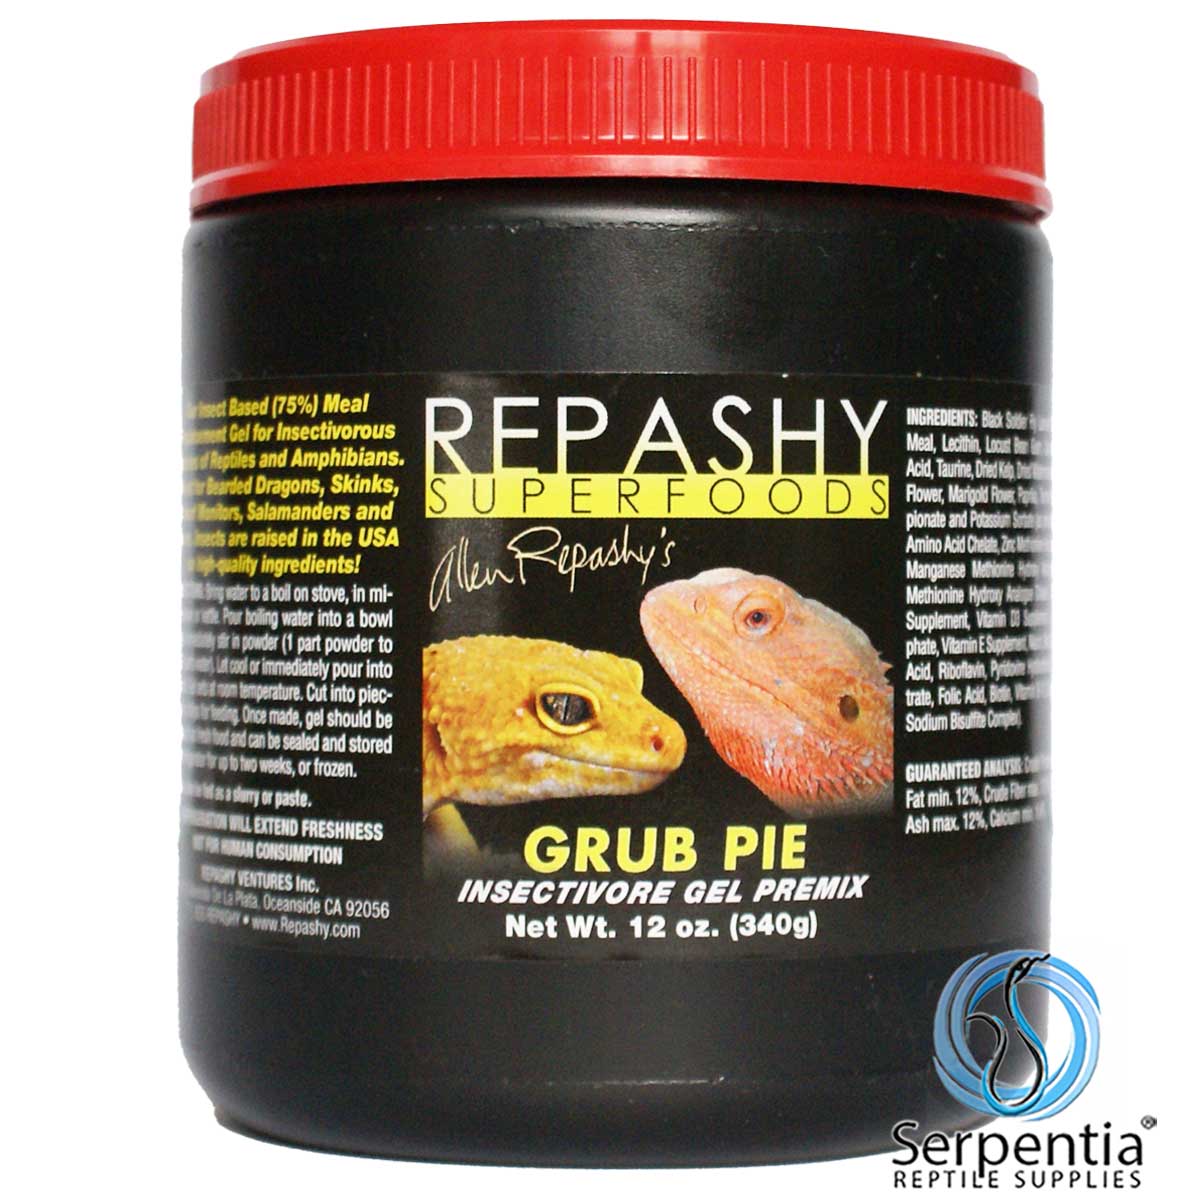 Repashy Grub Pie Insectivore Diet Gel Premix (Reptile) 6 Oz JAR